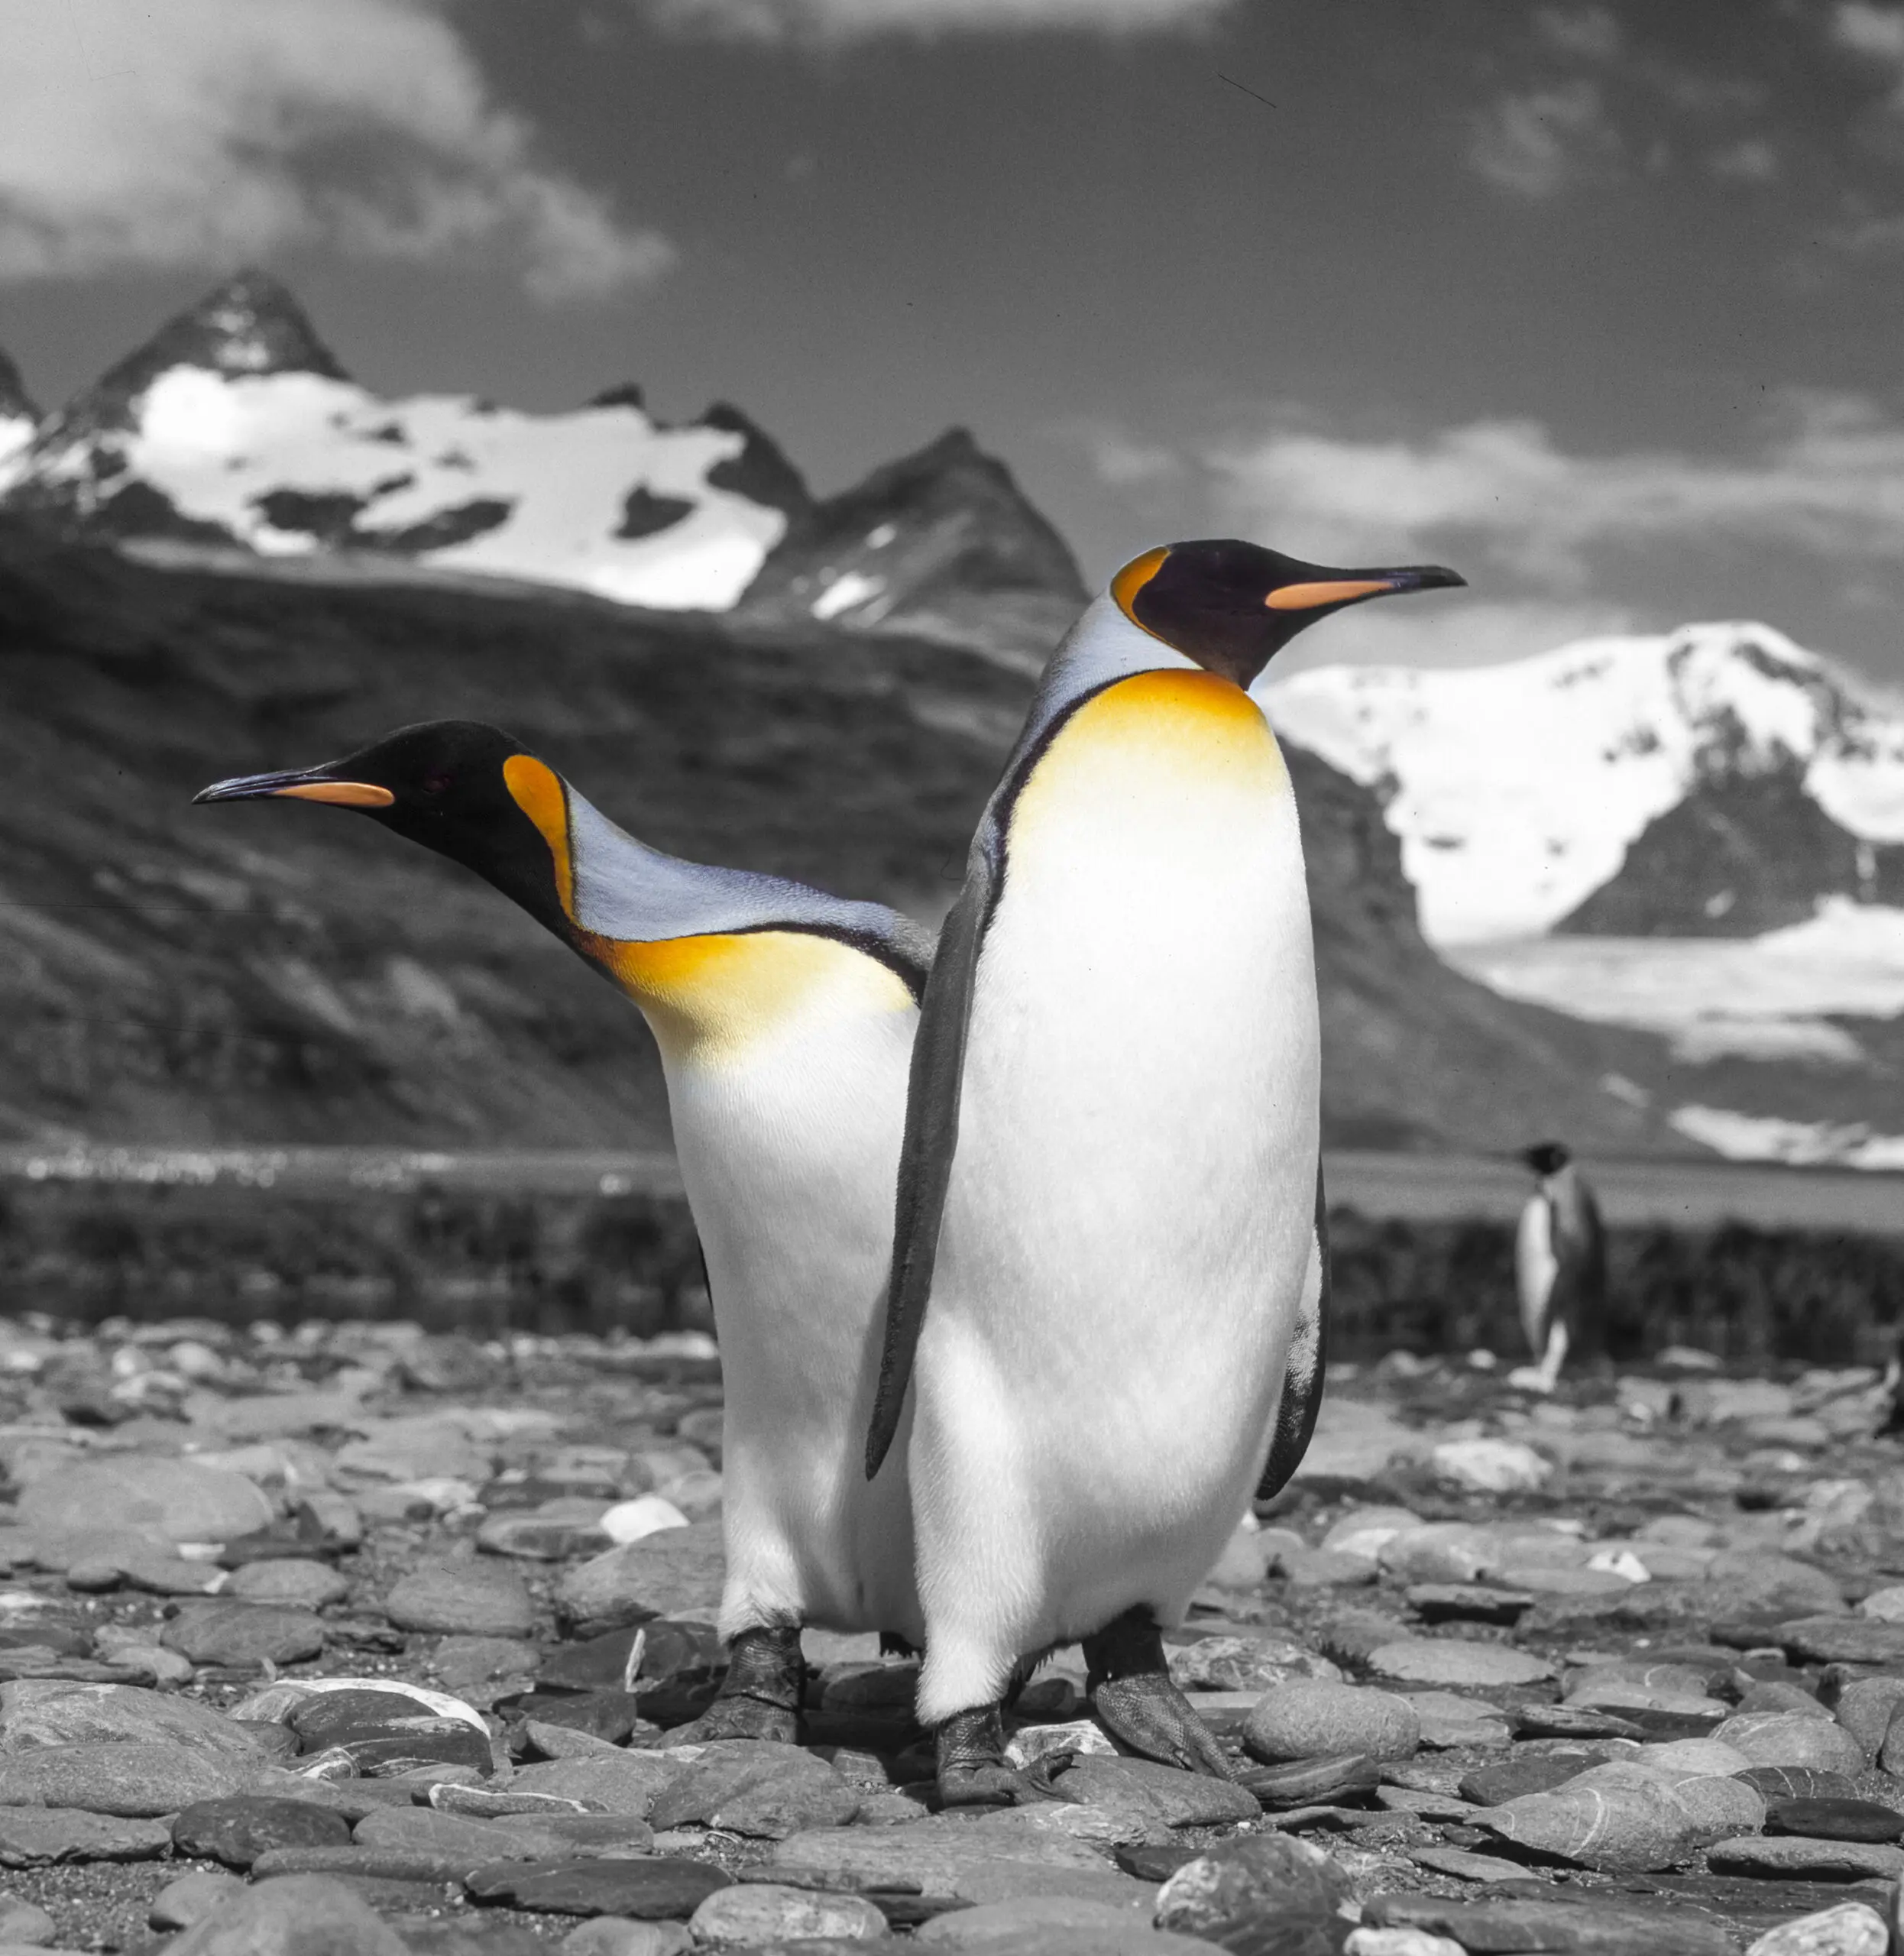 Wandbild (4453) Brautwalzer präsentiert: Natur,Pinguine